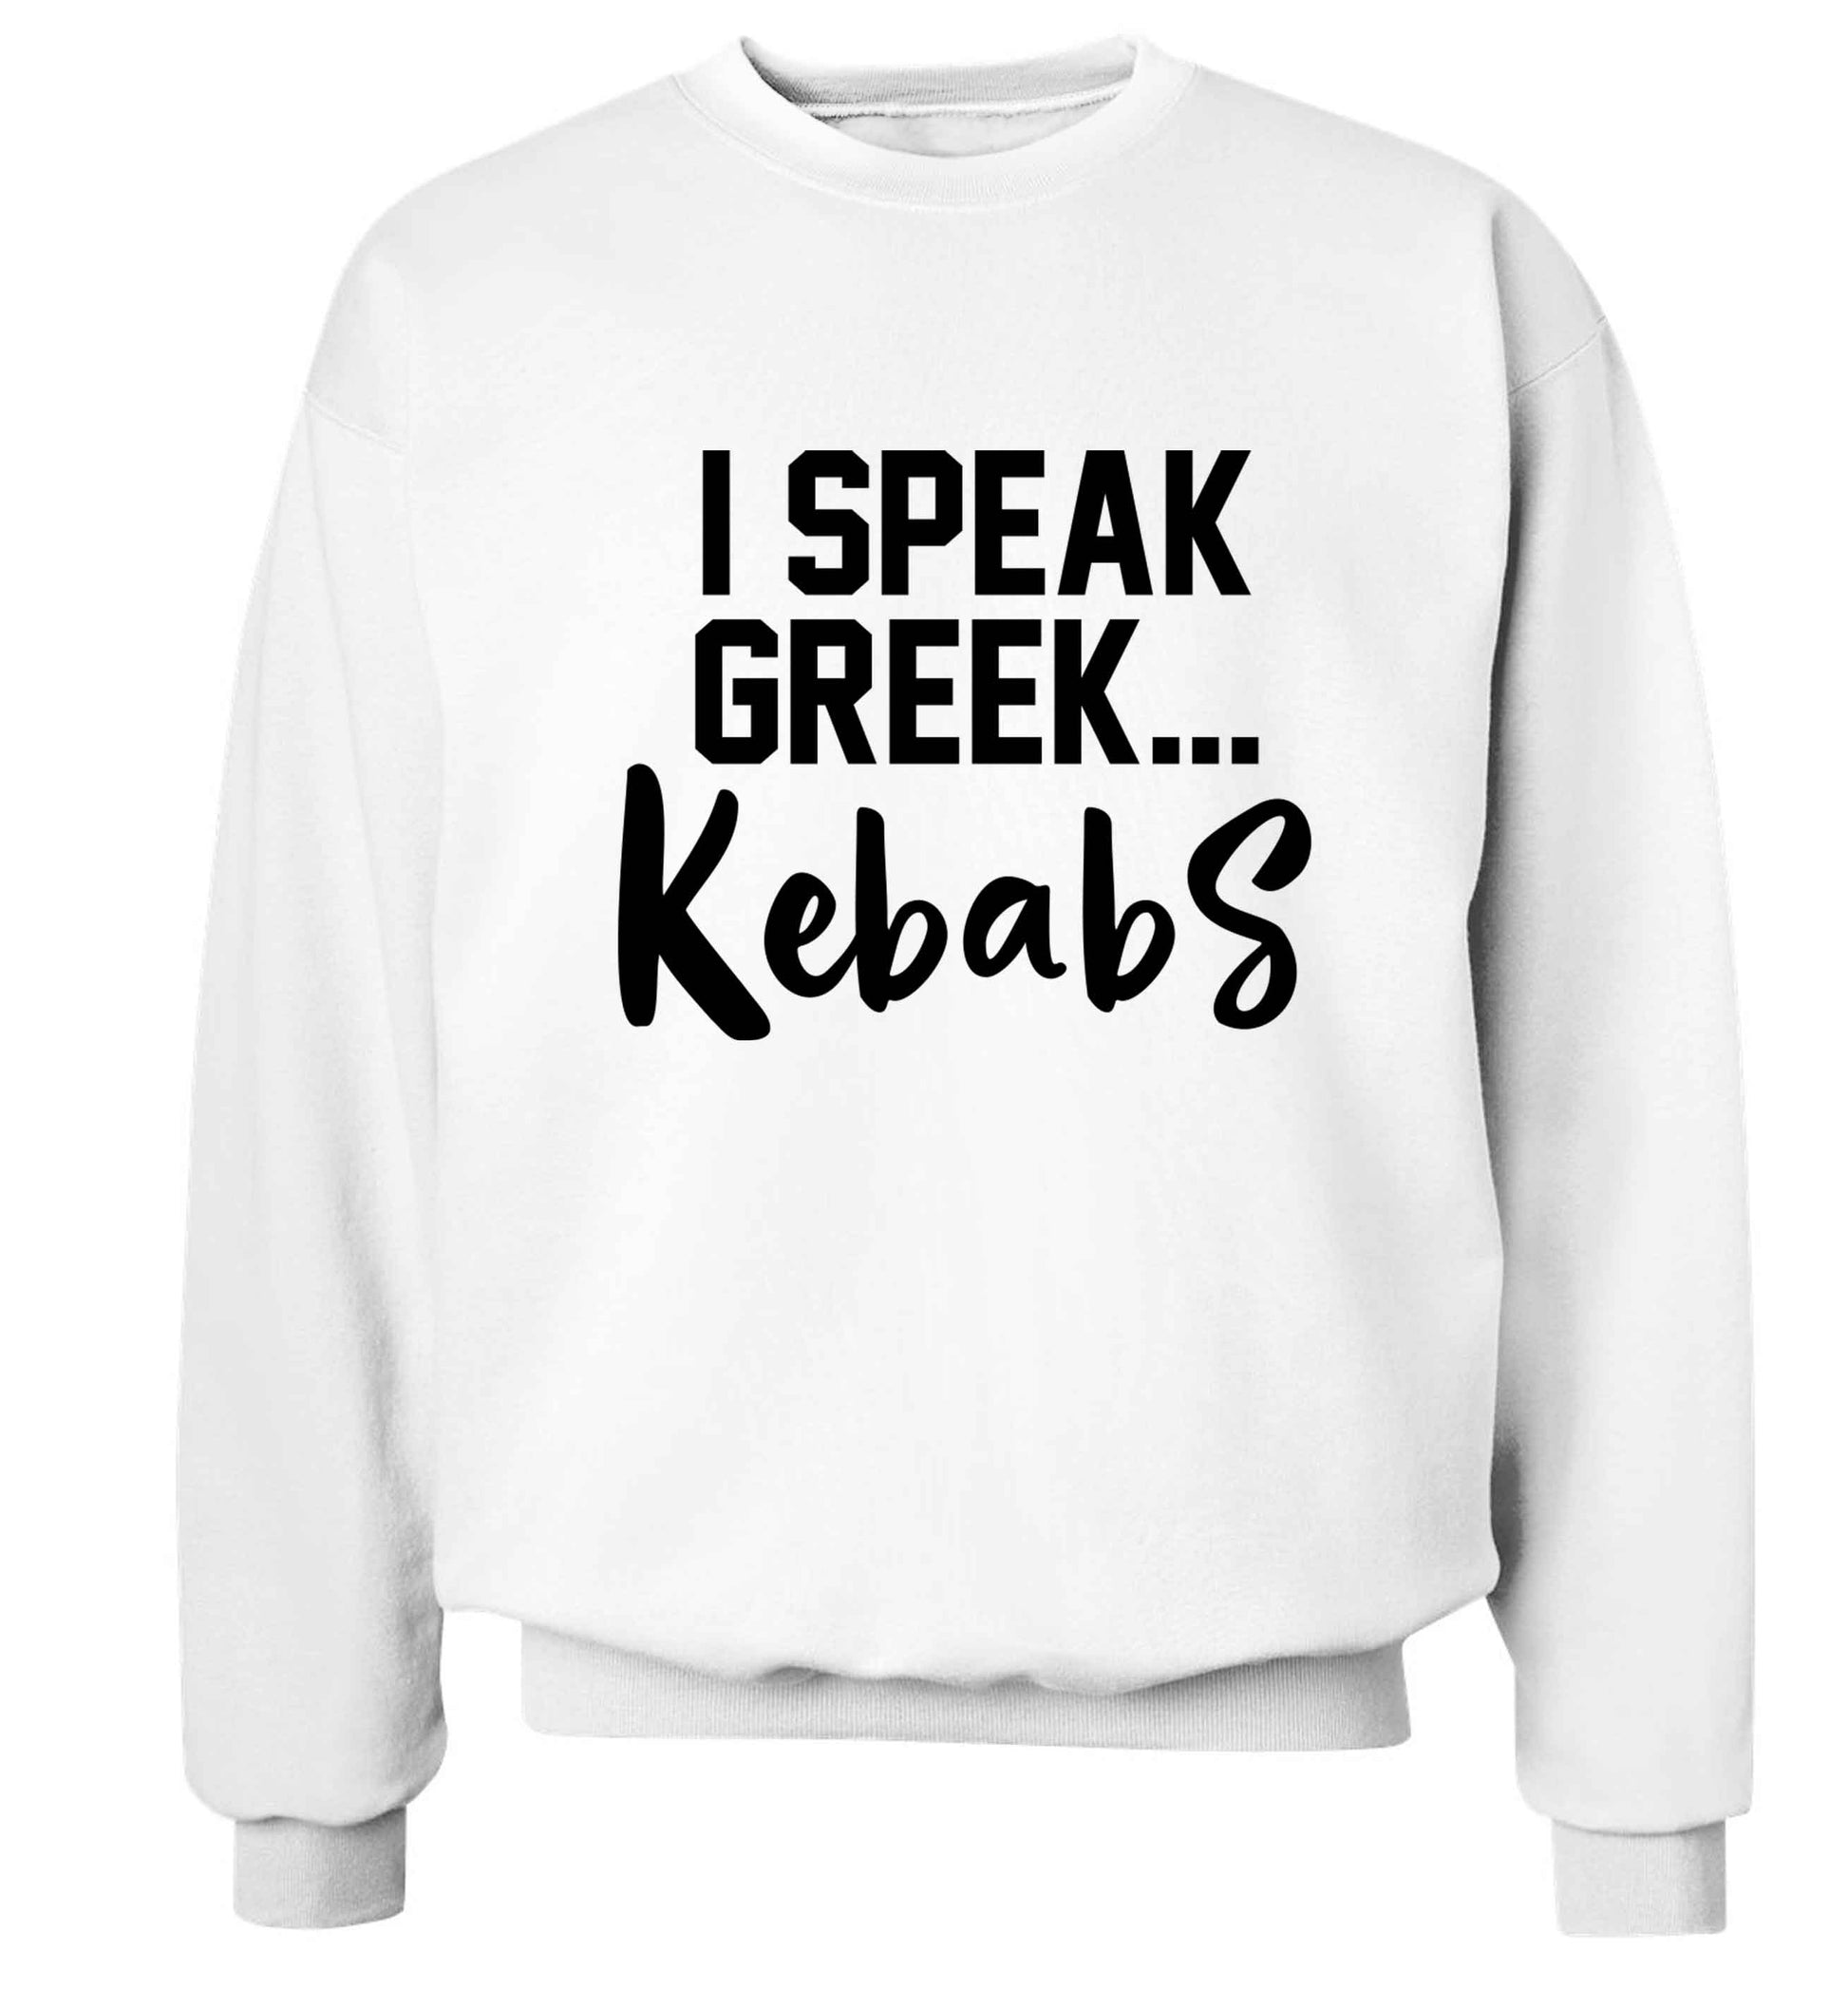 I speak Greek...kebabs Adult's unisex white Sweater 2XL